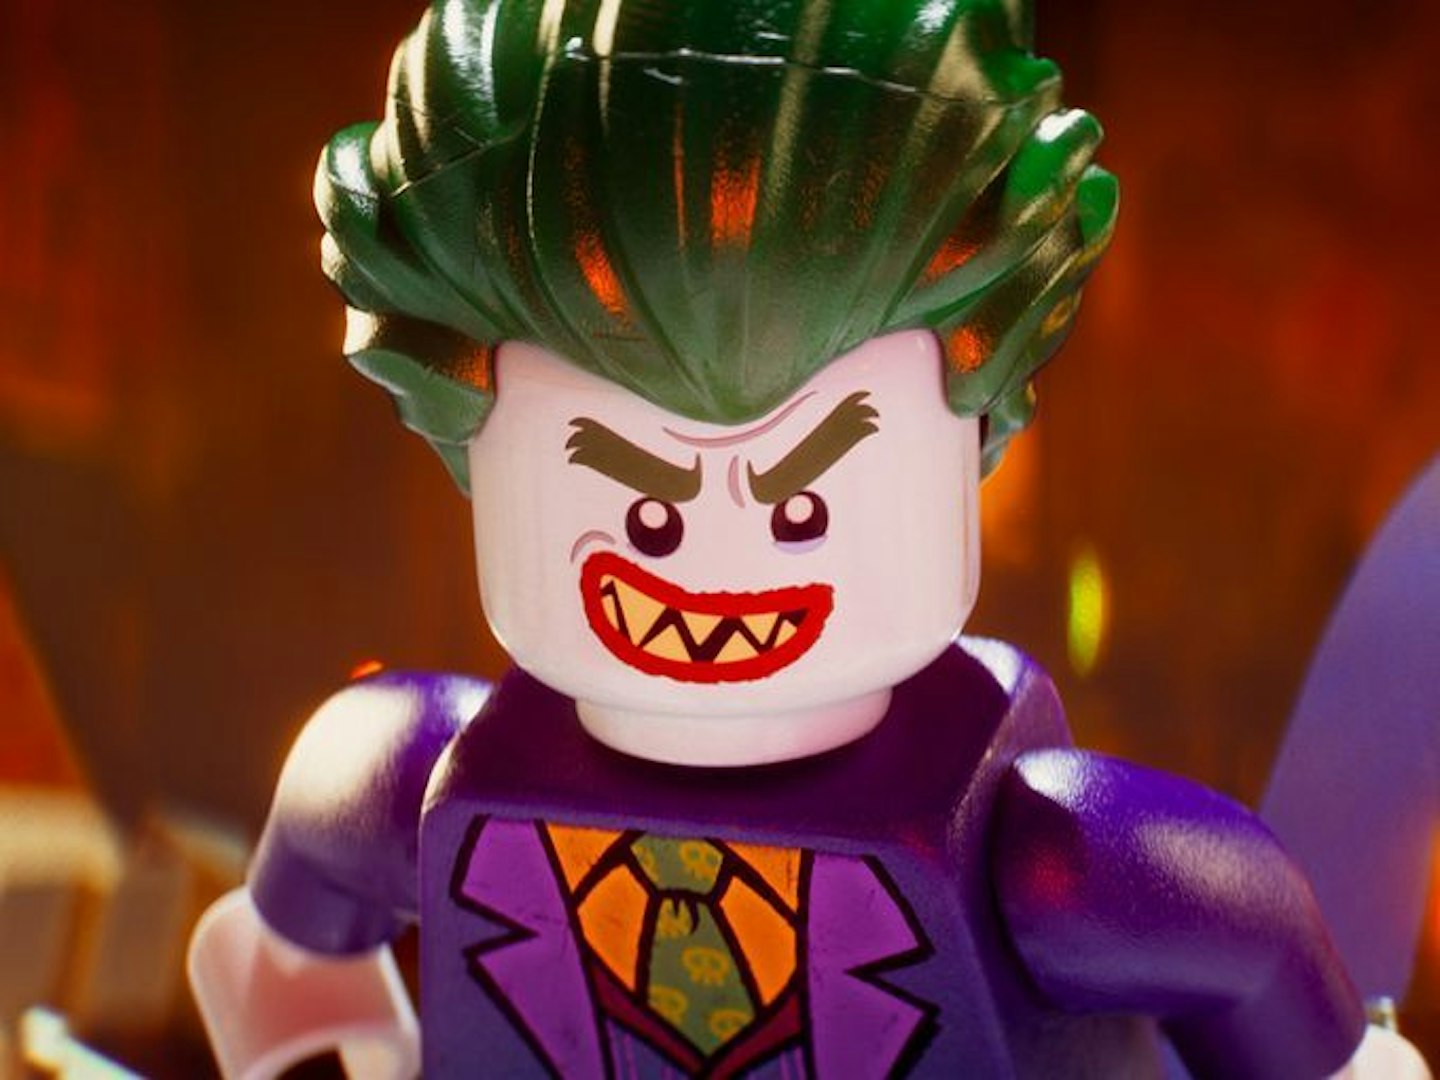 The Lego Batman Movie – The Joker